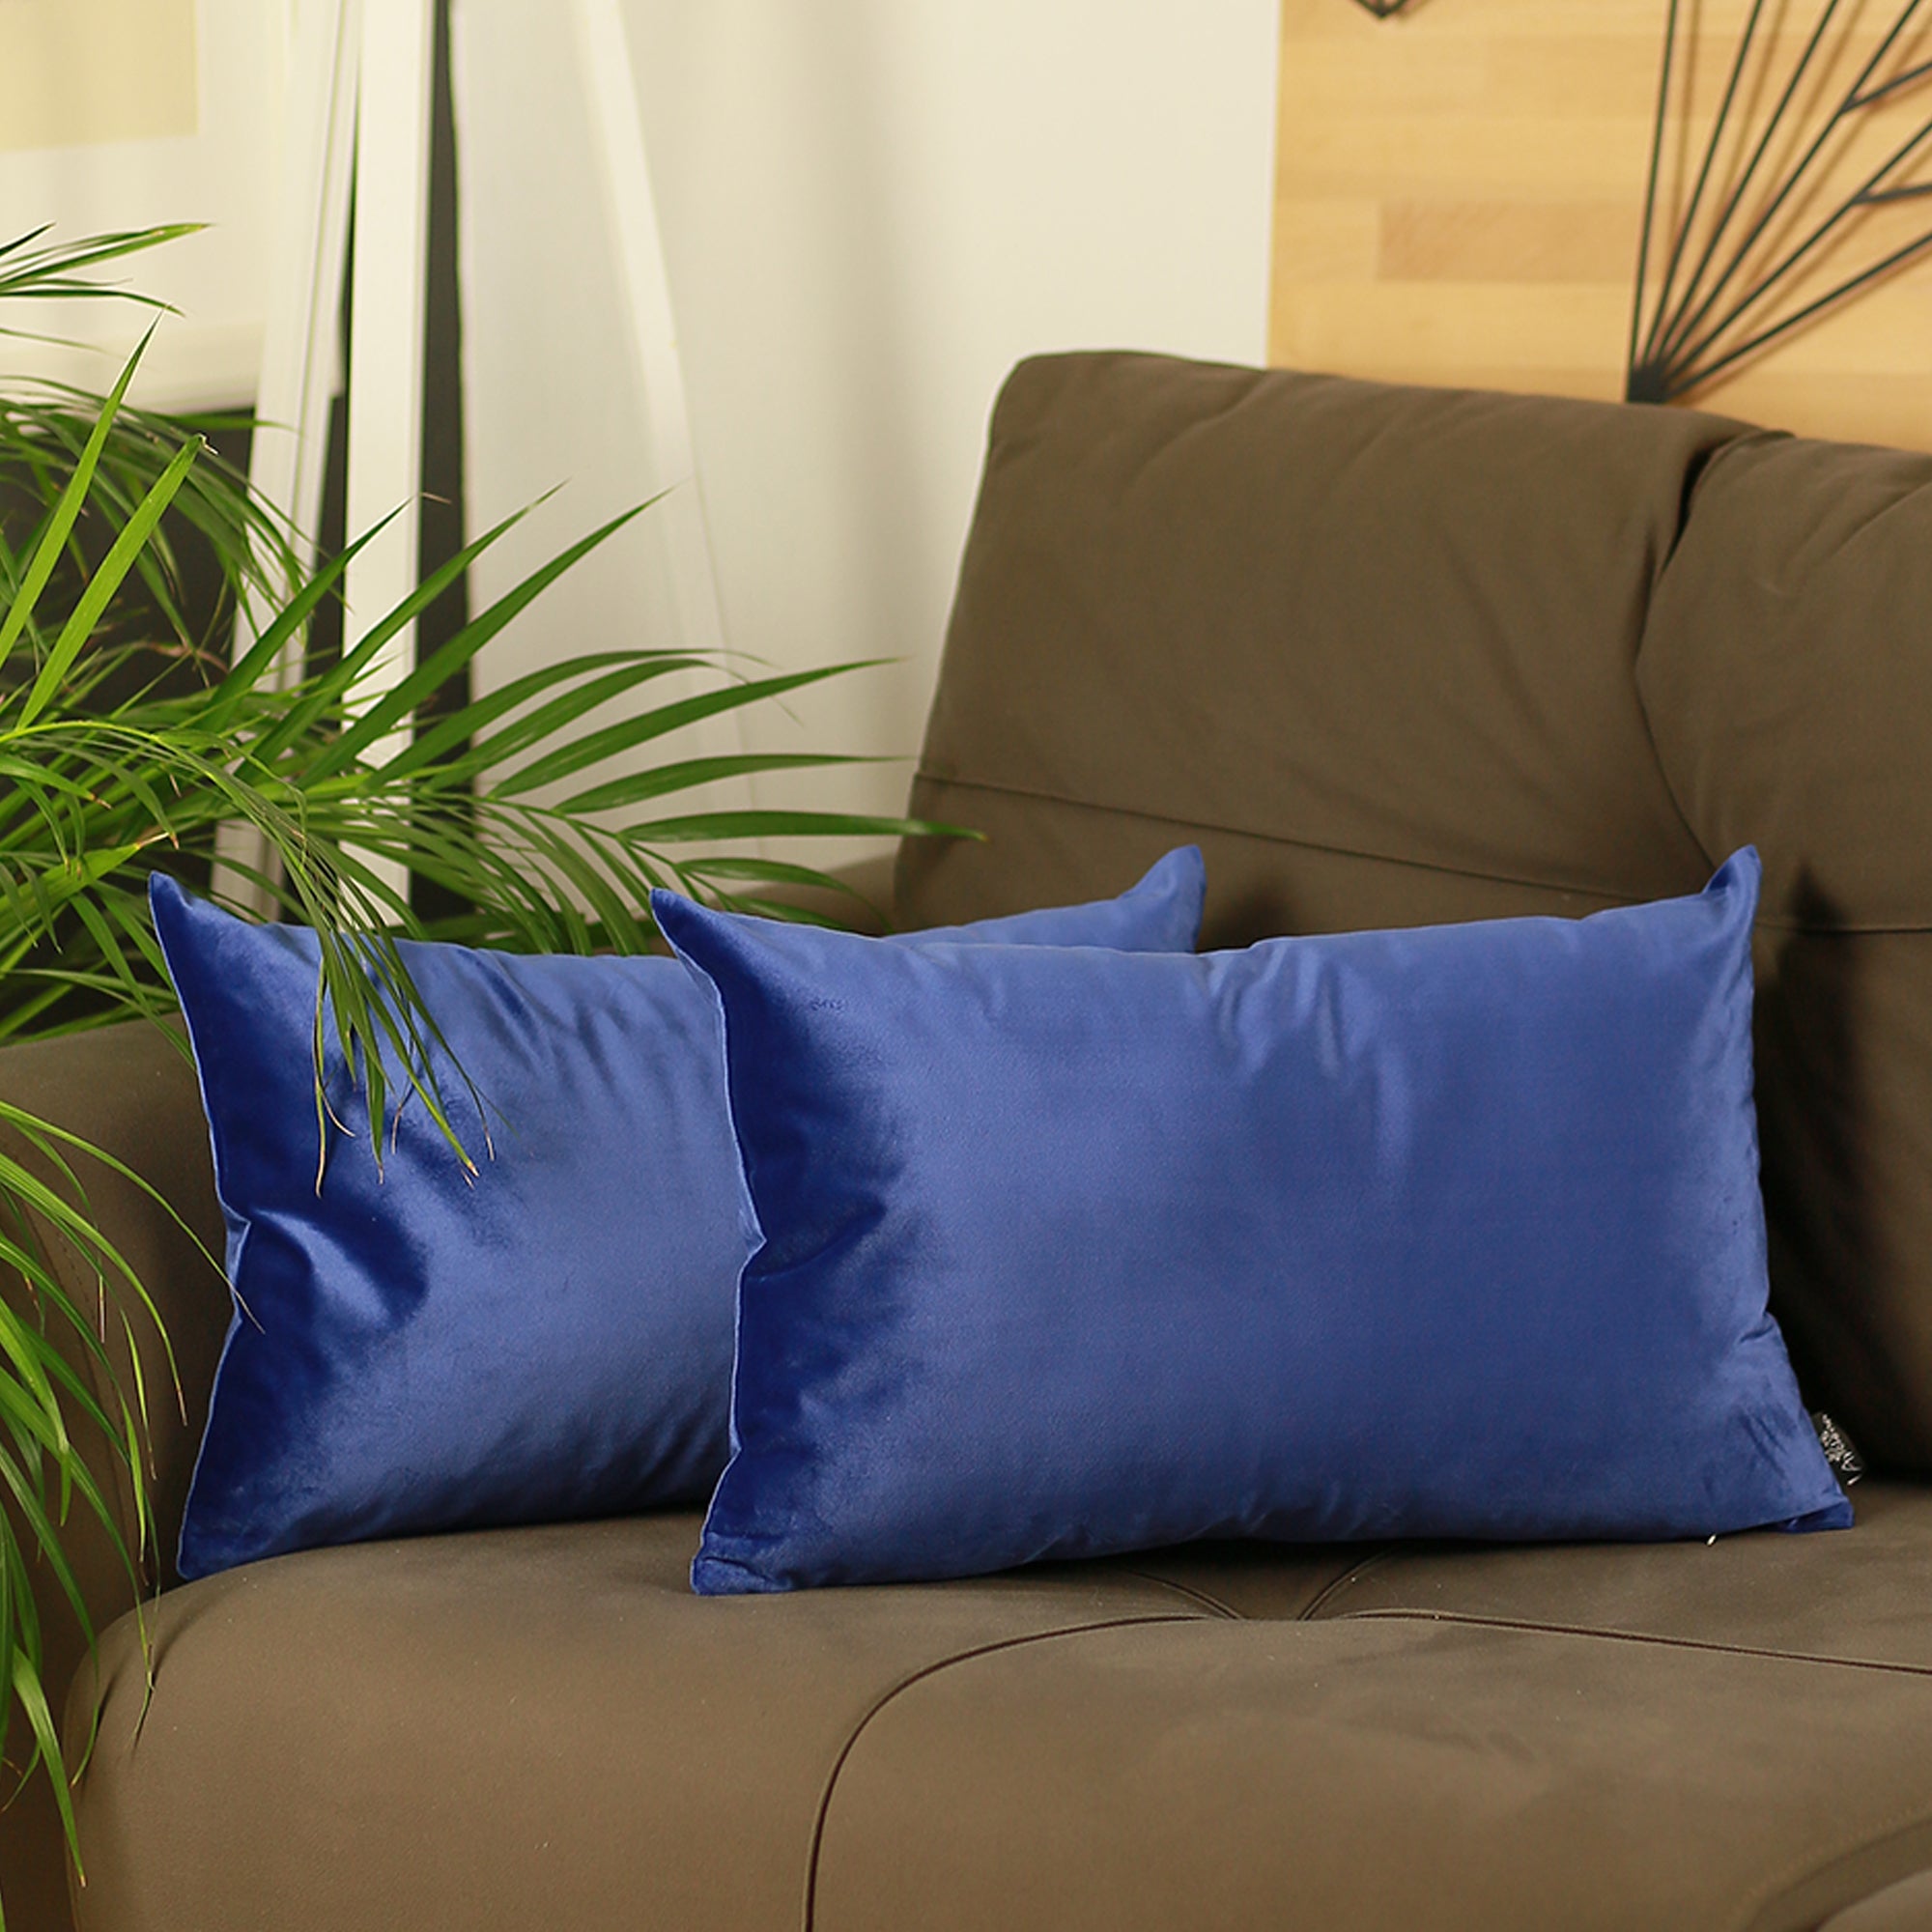 Velvet Navy Blue Decorative Throw Pillow Cover Home Decor Apolena